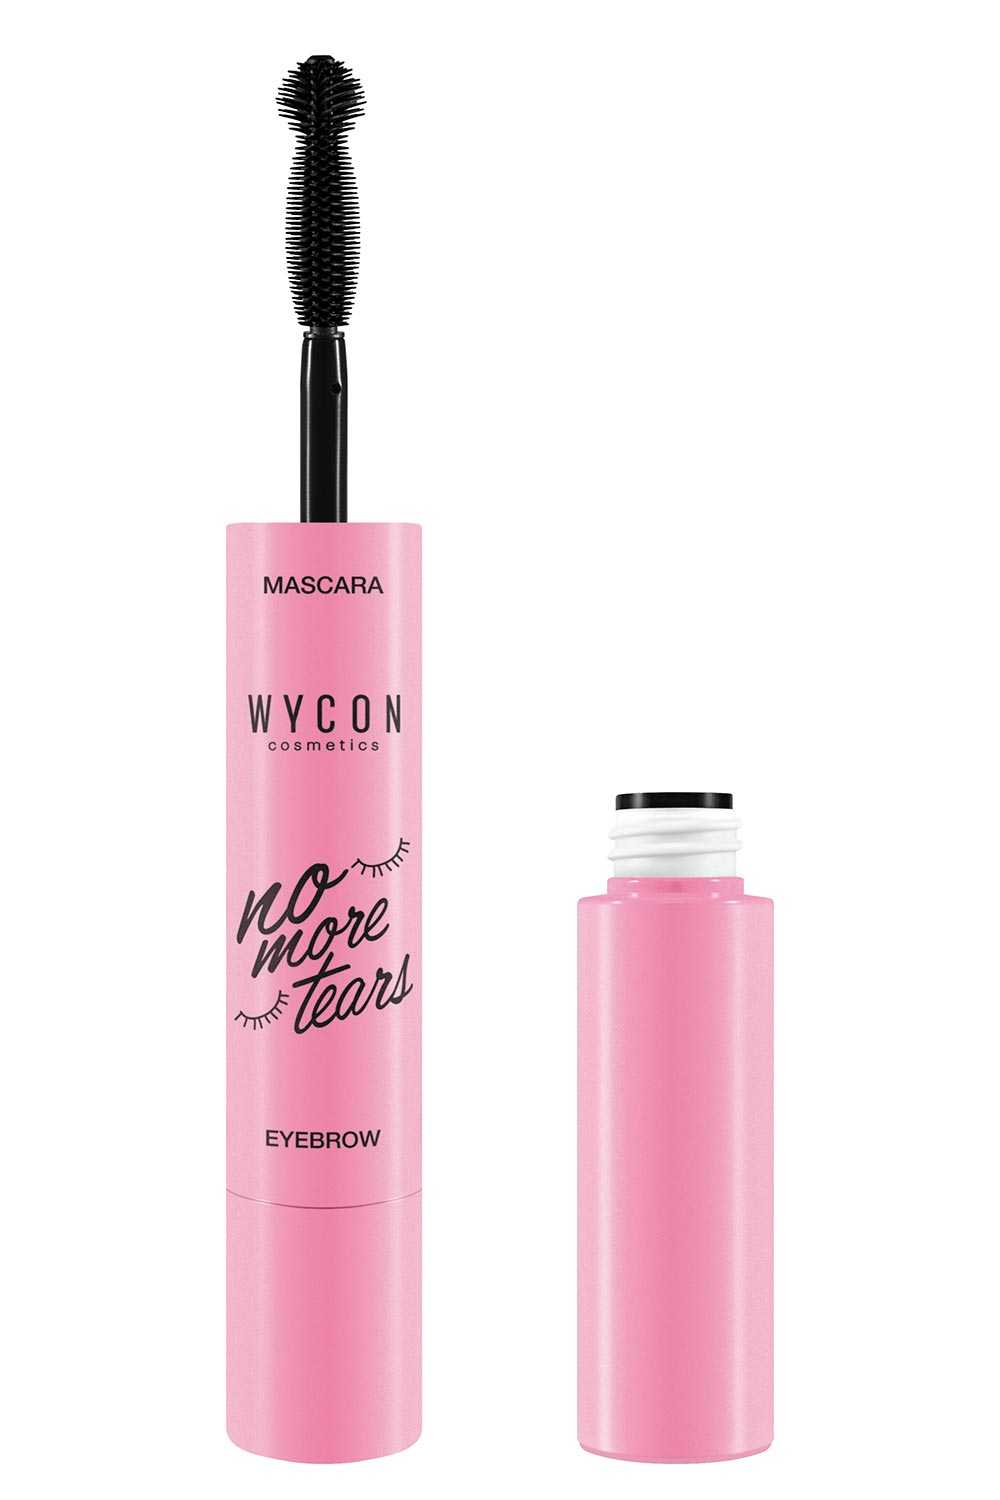 mascara wycon no more tears